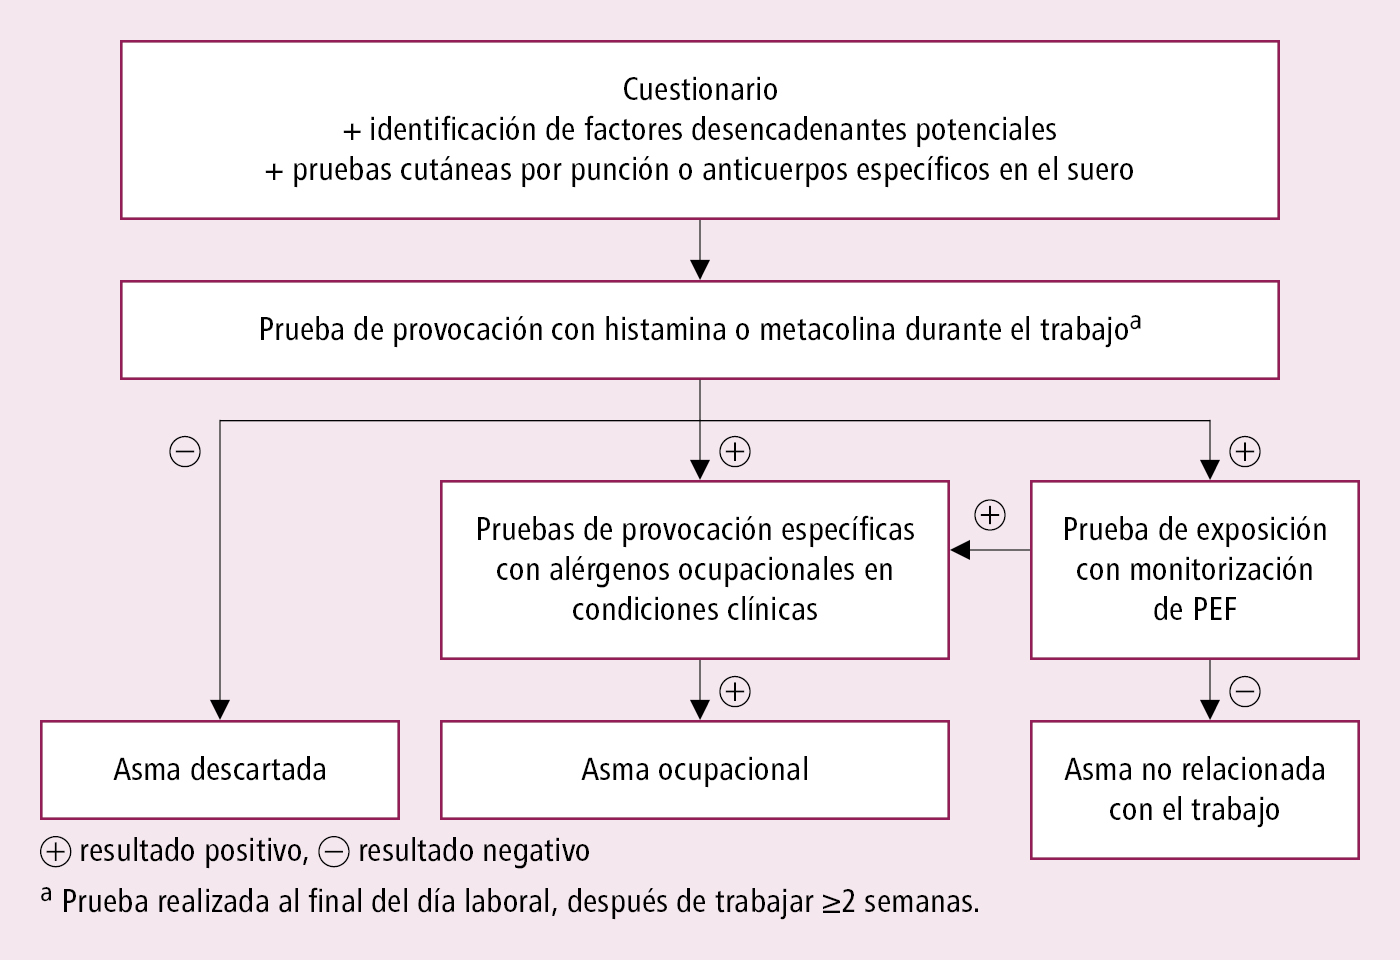    Fig. 3.17-1.  Algoritmo de diagnóstico del asma ocupacional 